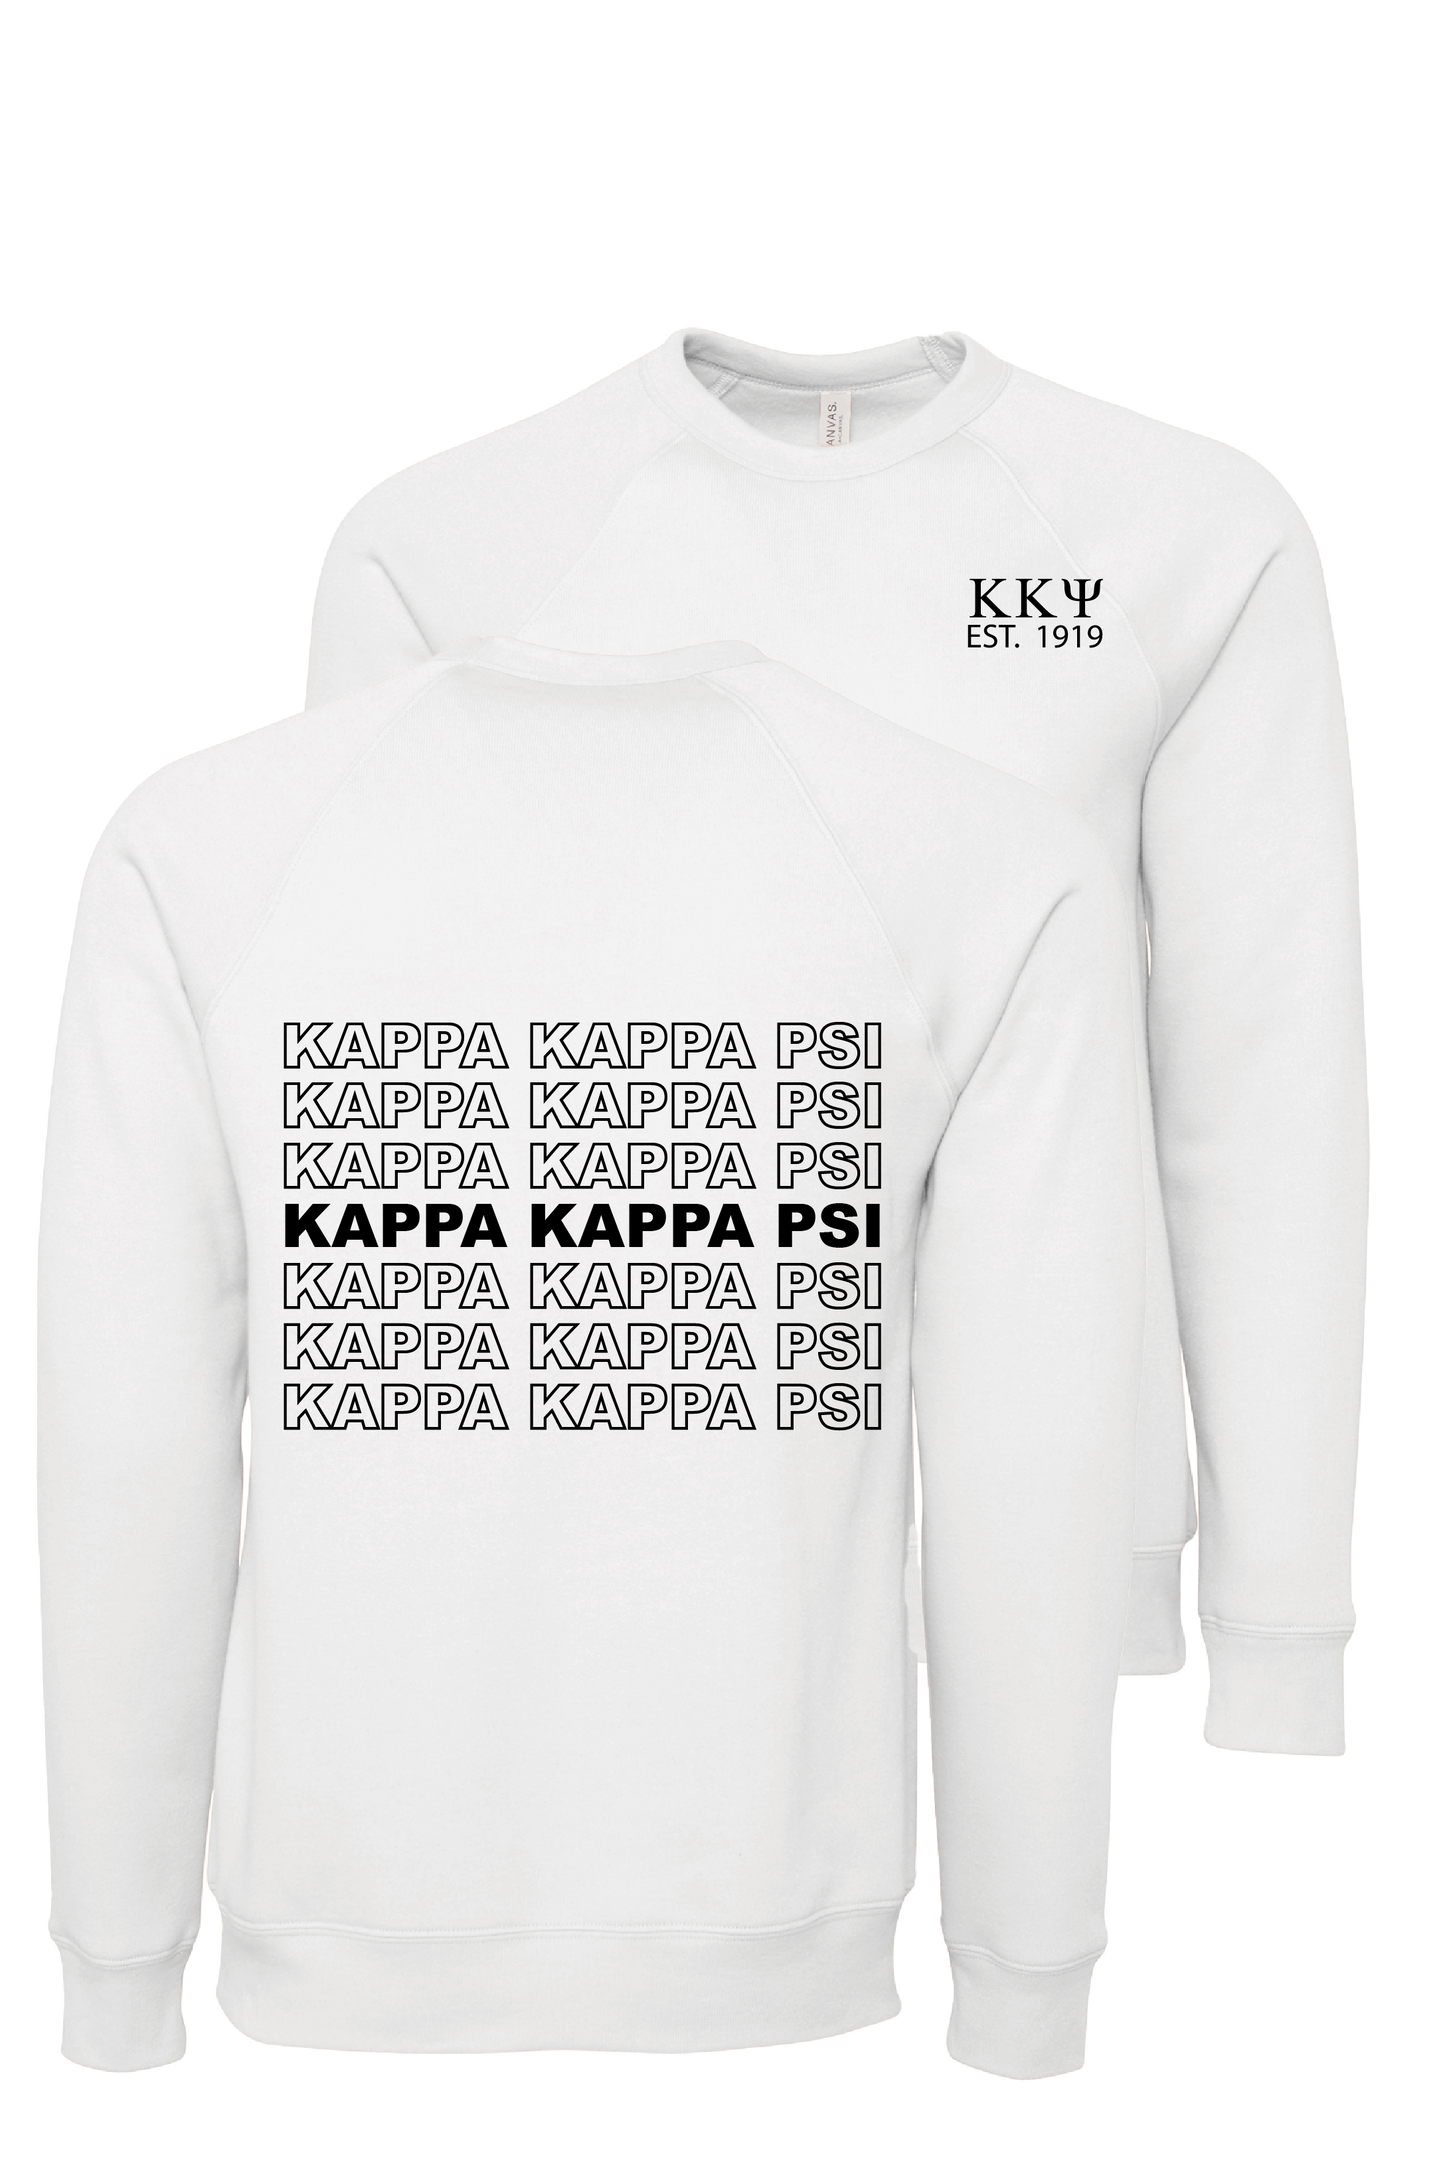 Kappa Kappa Psi Repeating Name Crewneck Sweatshirts